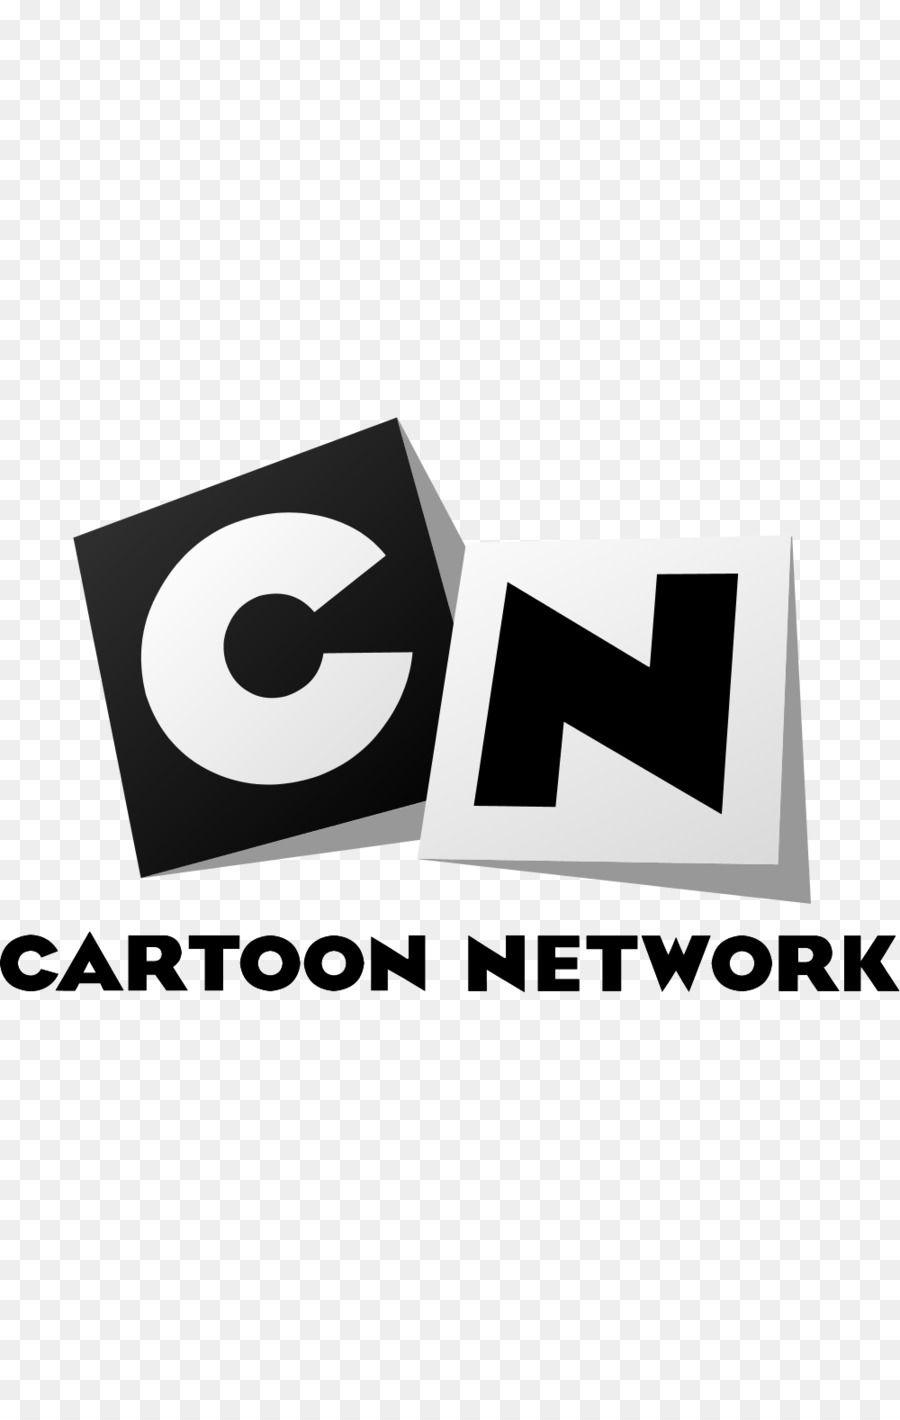 File:Cartoon Network Studios 1st logo v1.png - Wikimedia Commons